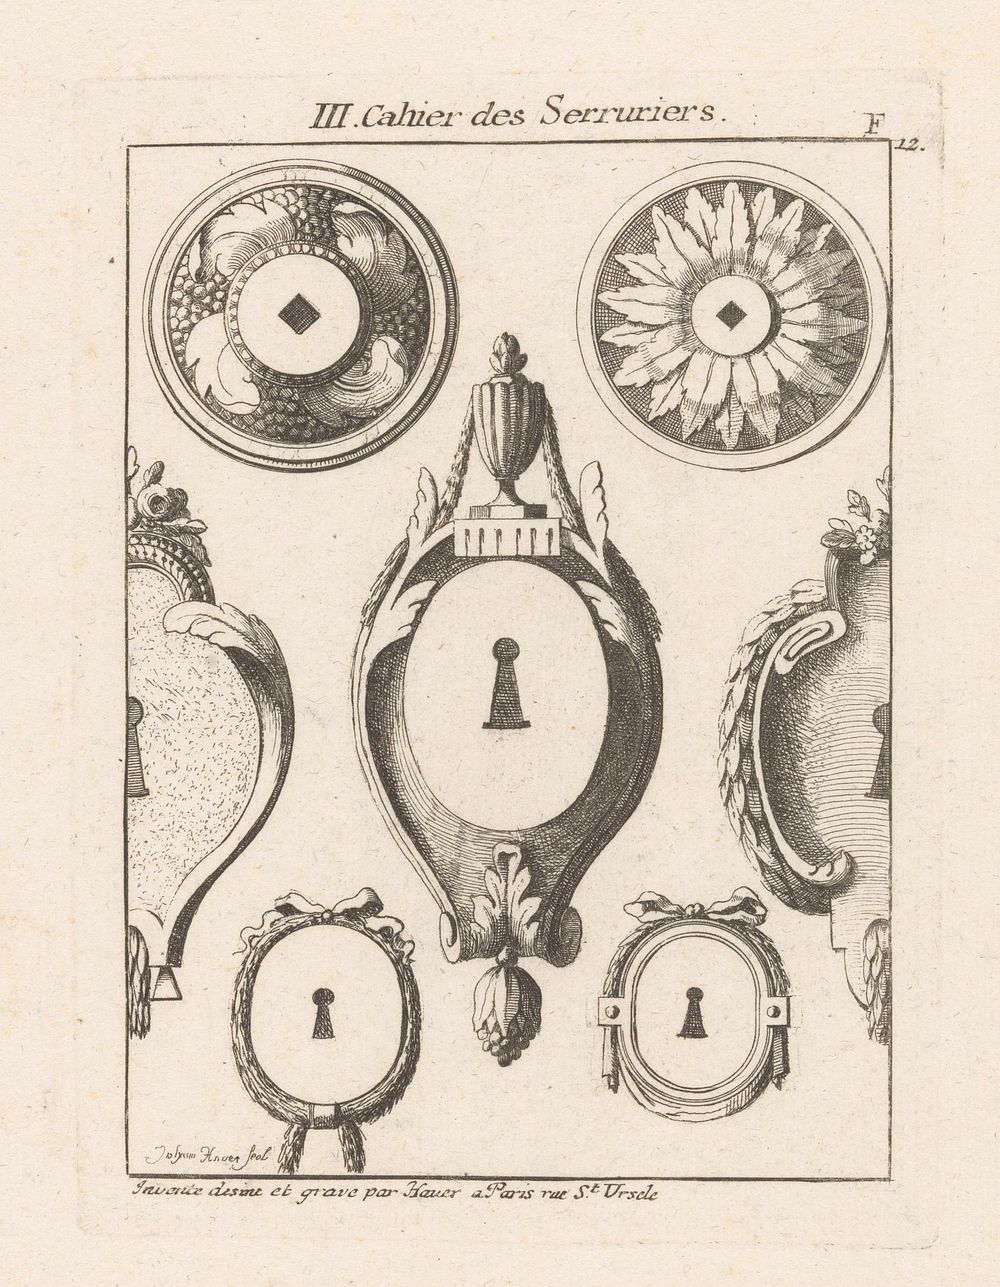 Zeven sloten (1781) by Johann Thomas Hauer and Johann Thomas Hauer